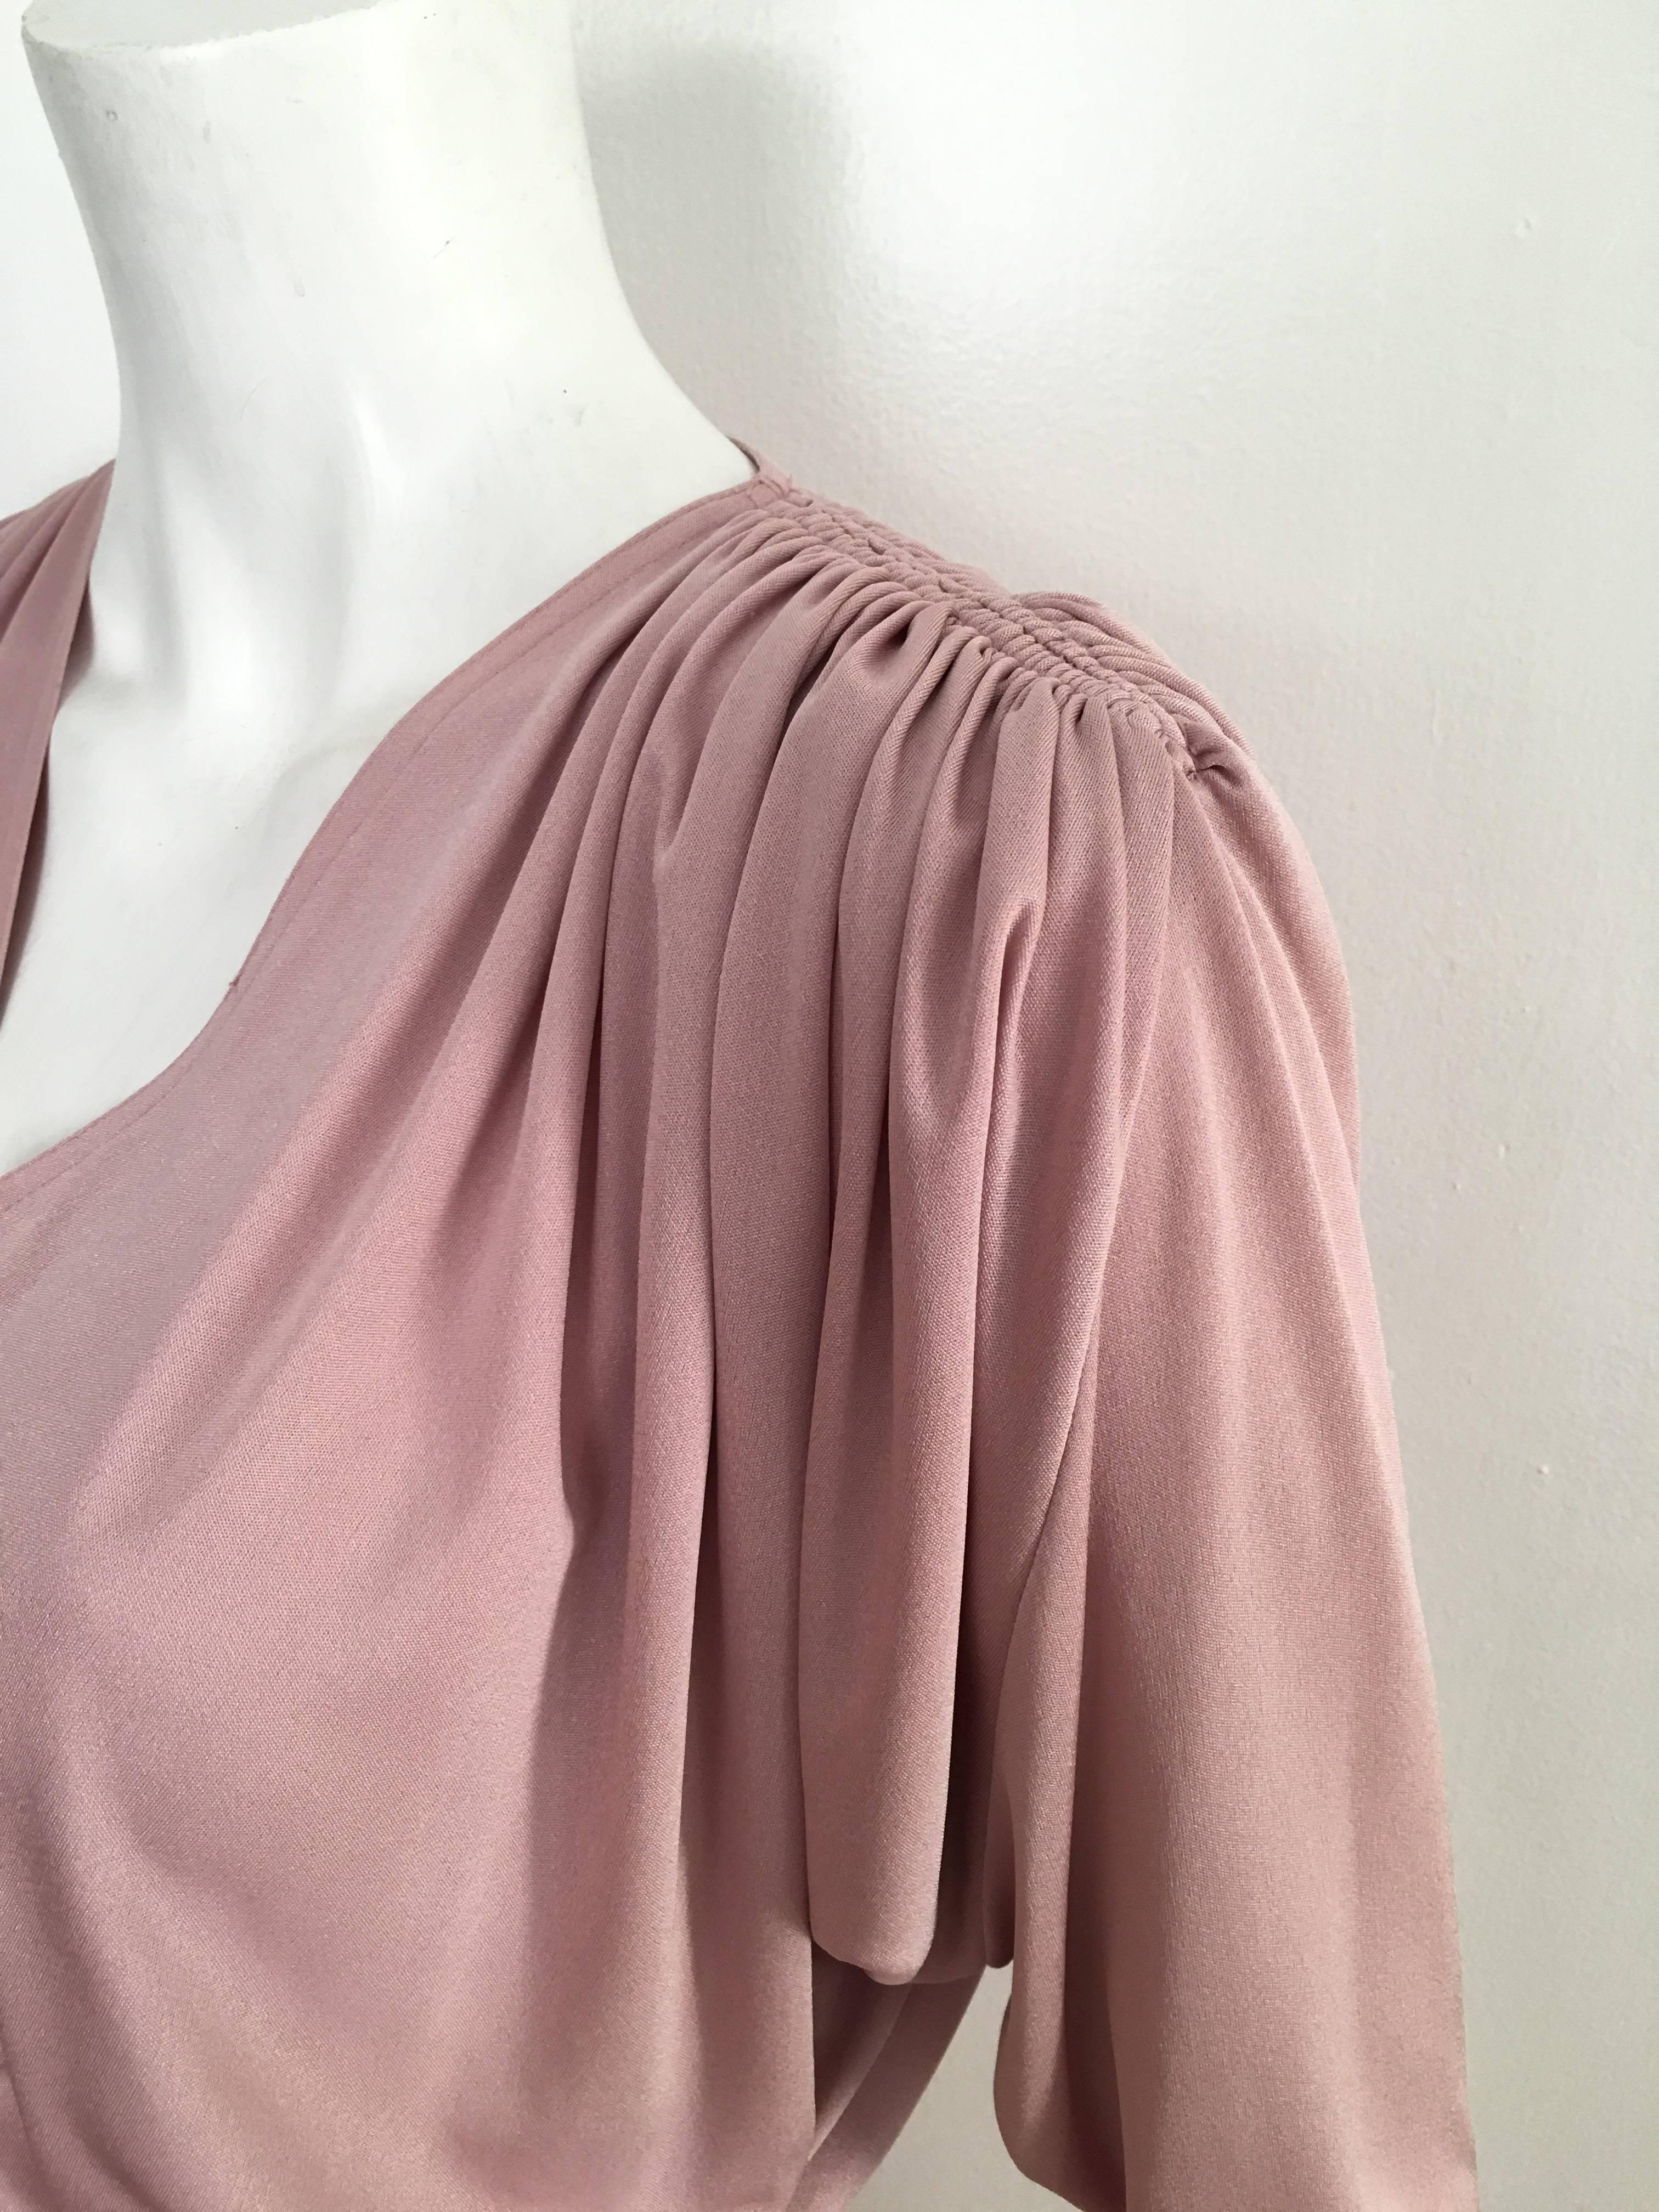 Pierre Cardin Faux Wrap Dress With Pockets Size 8, 1980s  For Sale 2